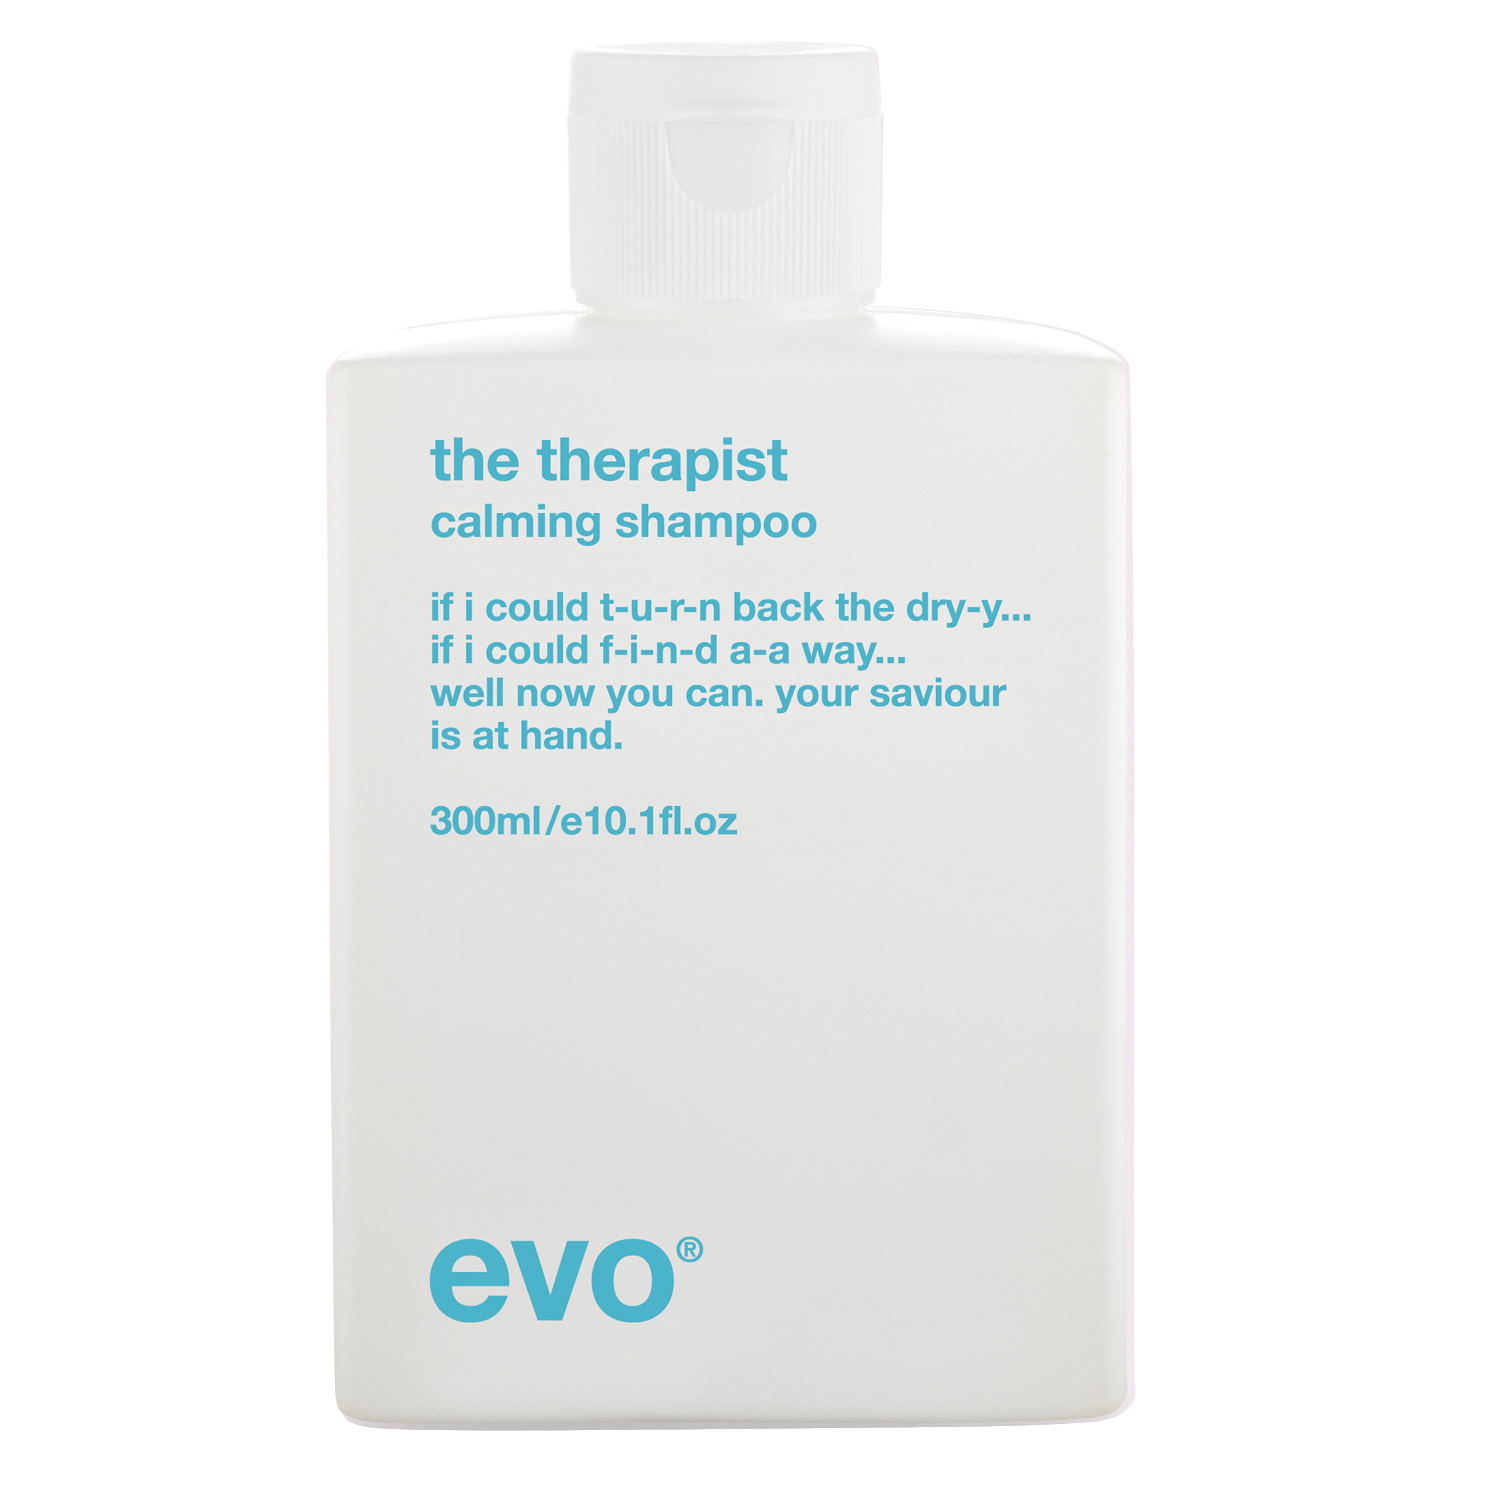 EVO Увлажняющий шампунь [терапевт] Calming Shampoo, 300 мл (EVO, the therapist) увлажняющий шампунь evo the therapist calming shampoo 300 мл